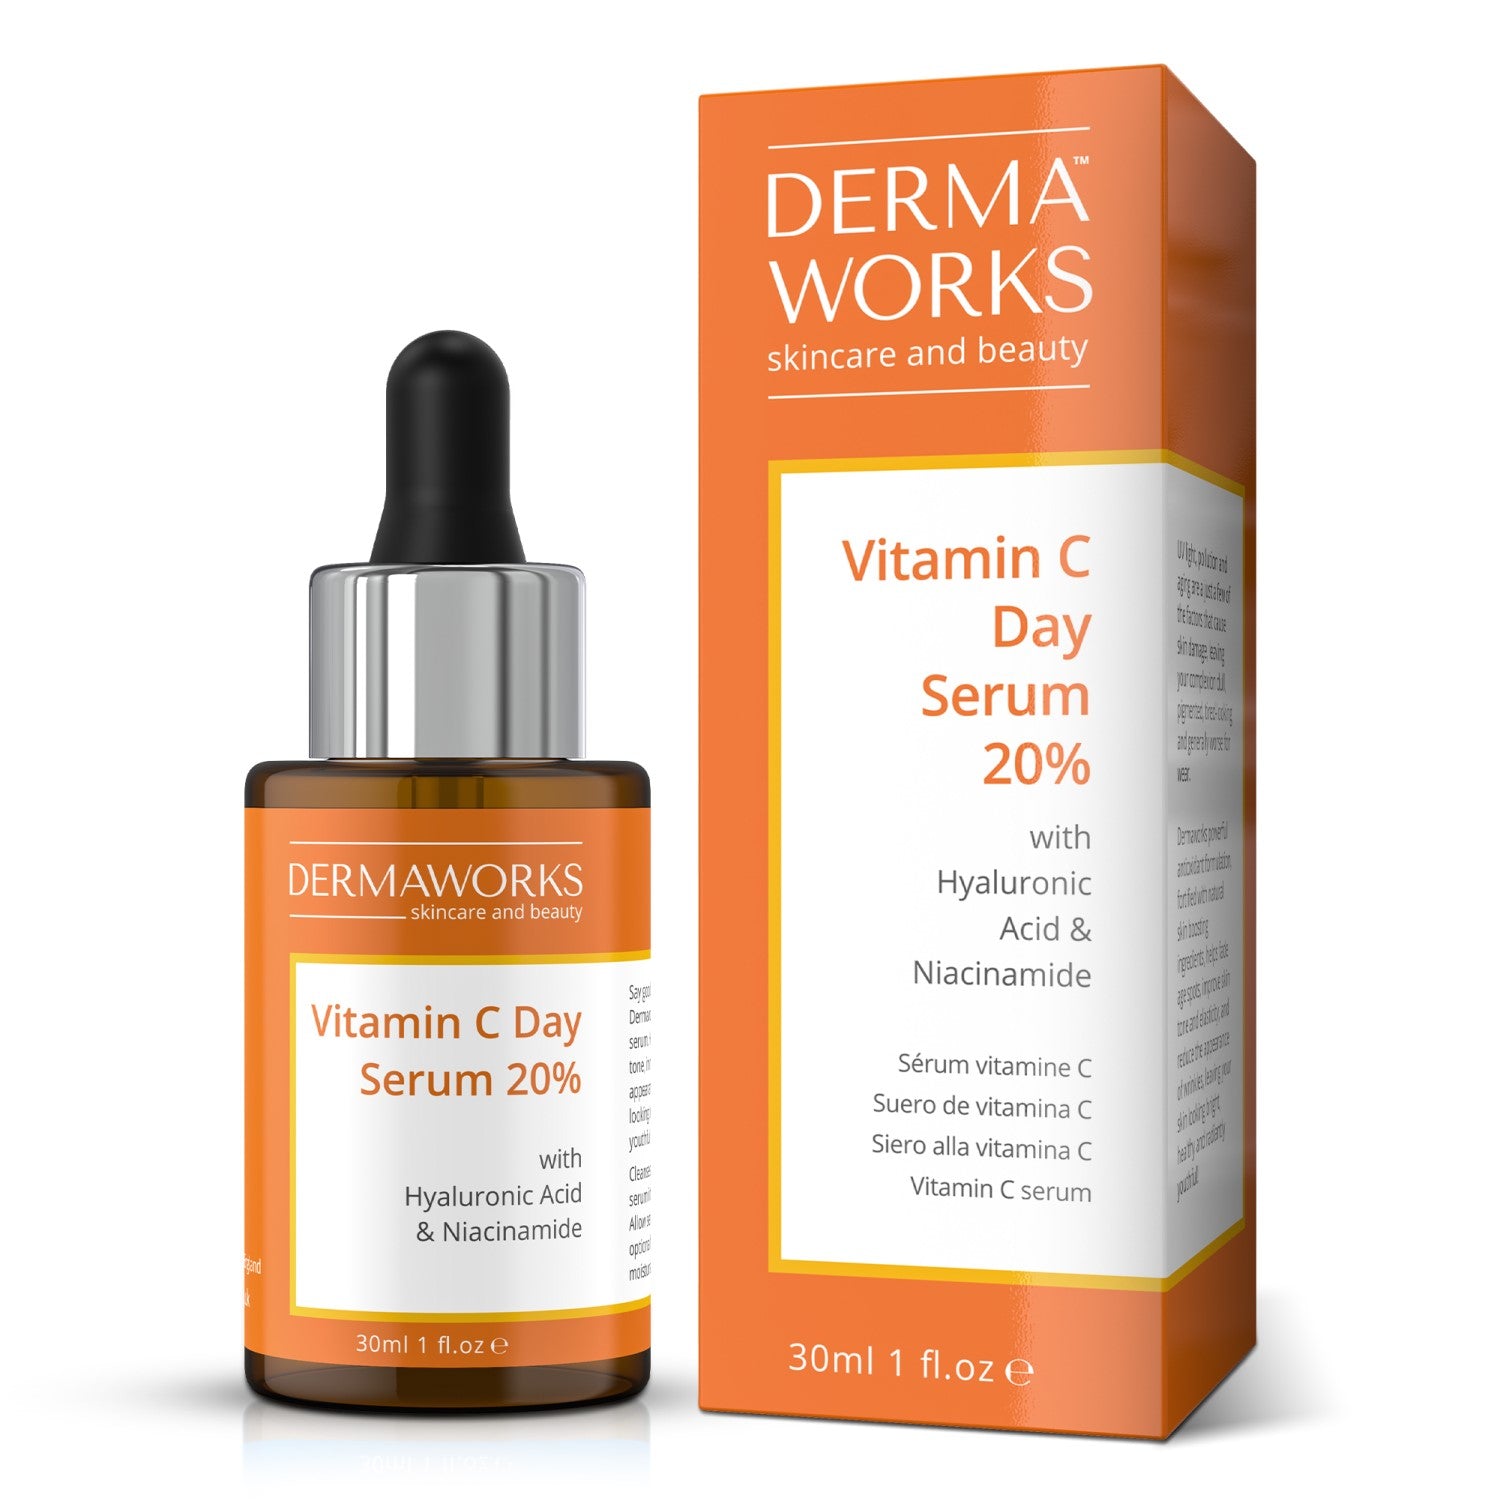 Dermaworks brightening vitamin c face serum with hyaluronic acid and niacinamide. Anti aging skin care. Dark spot correcting glow serum.